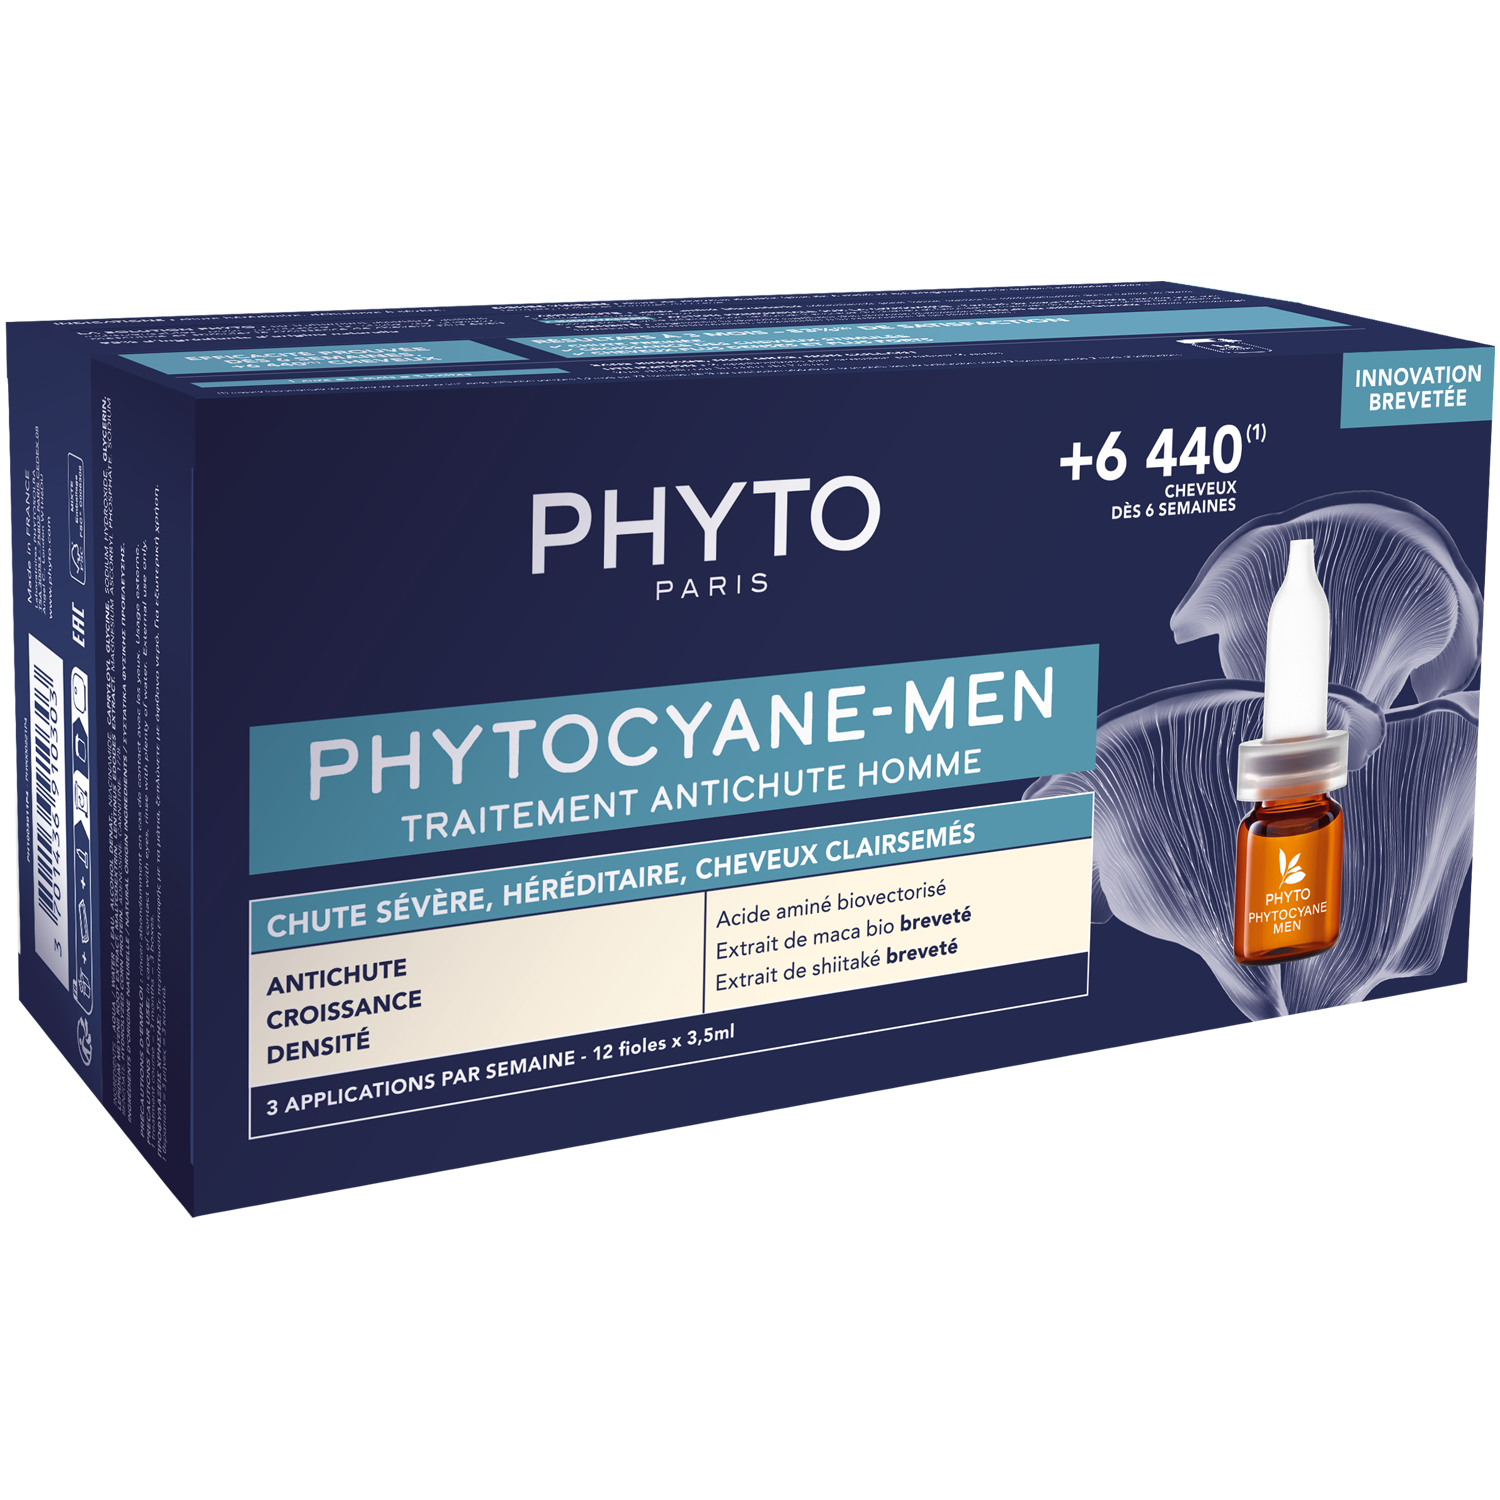 Phyto Phytocyane-Men средство против выпадения волос, 50 ​​мл phyto сыворотка против выпадения волос для женщин 12 ампул х 5 мл phyto phytocyane